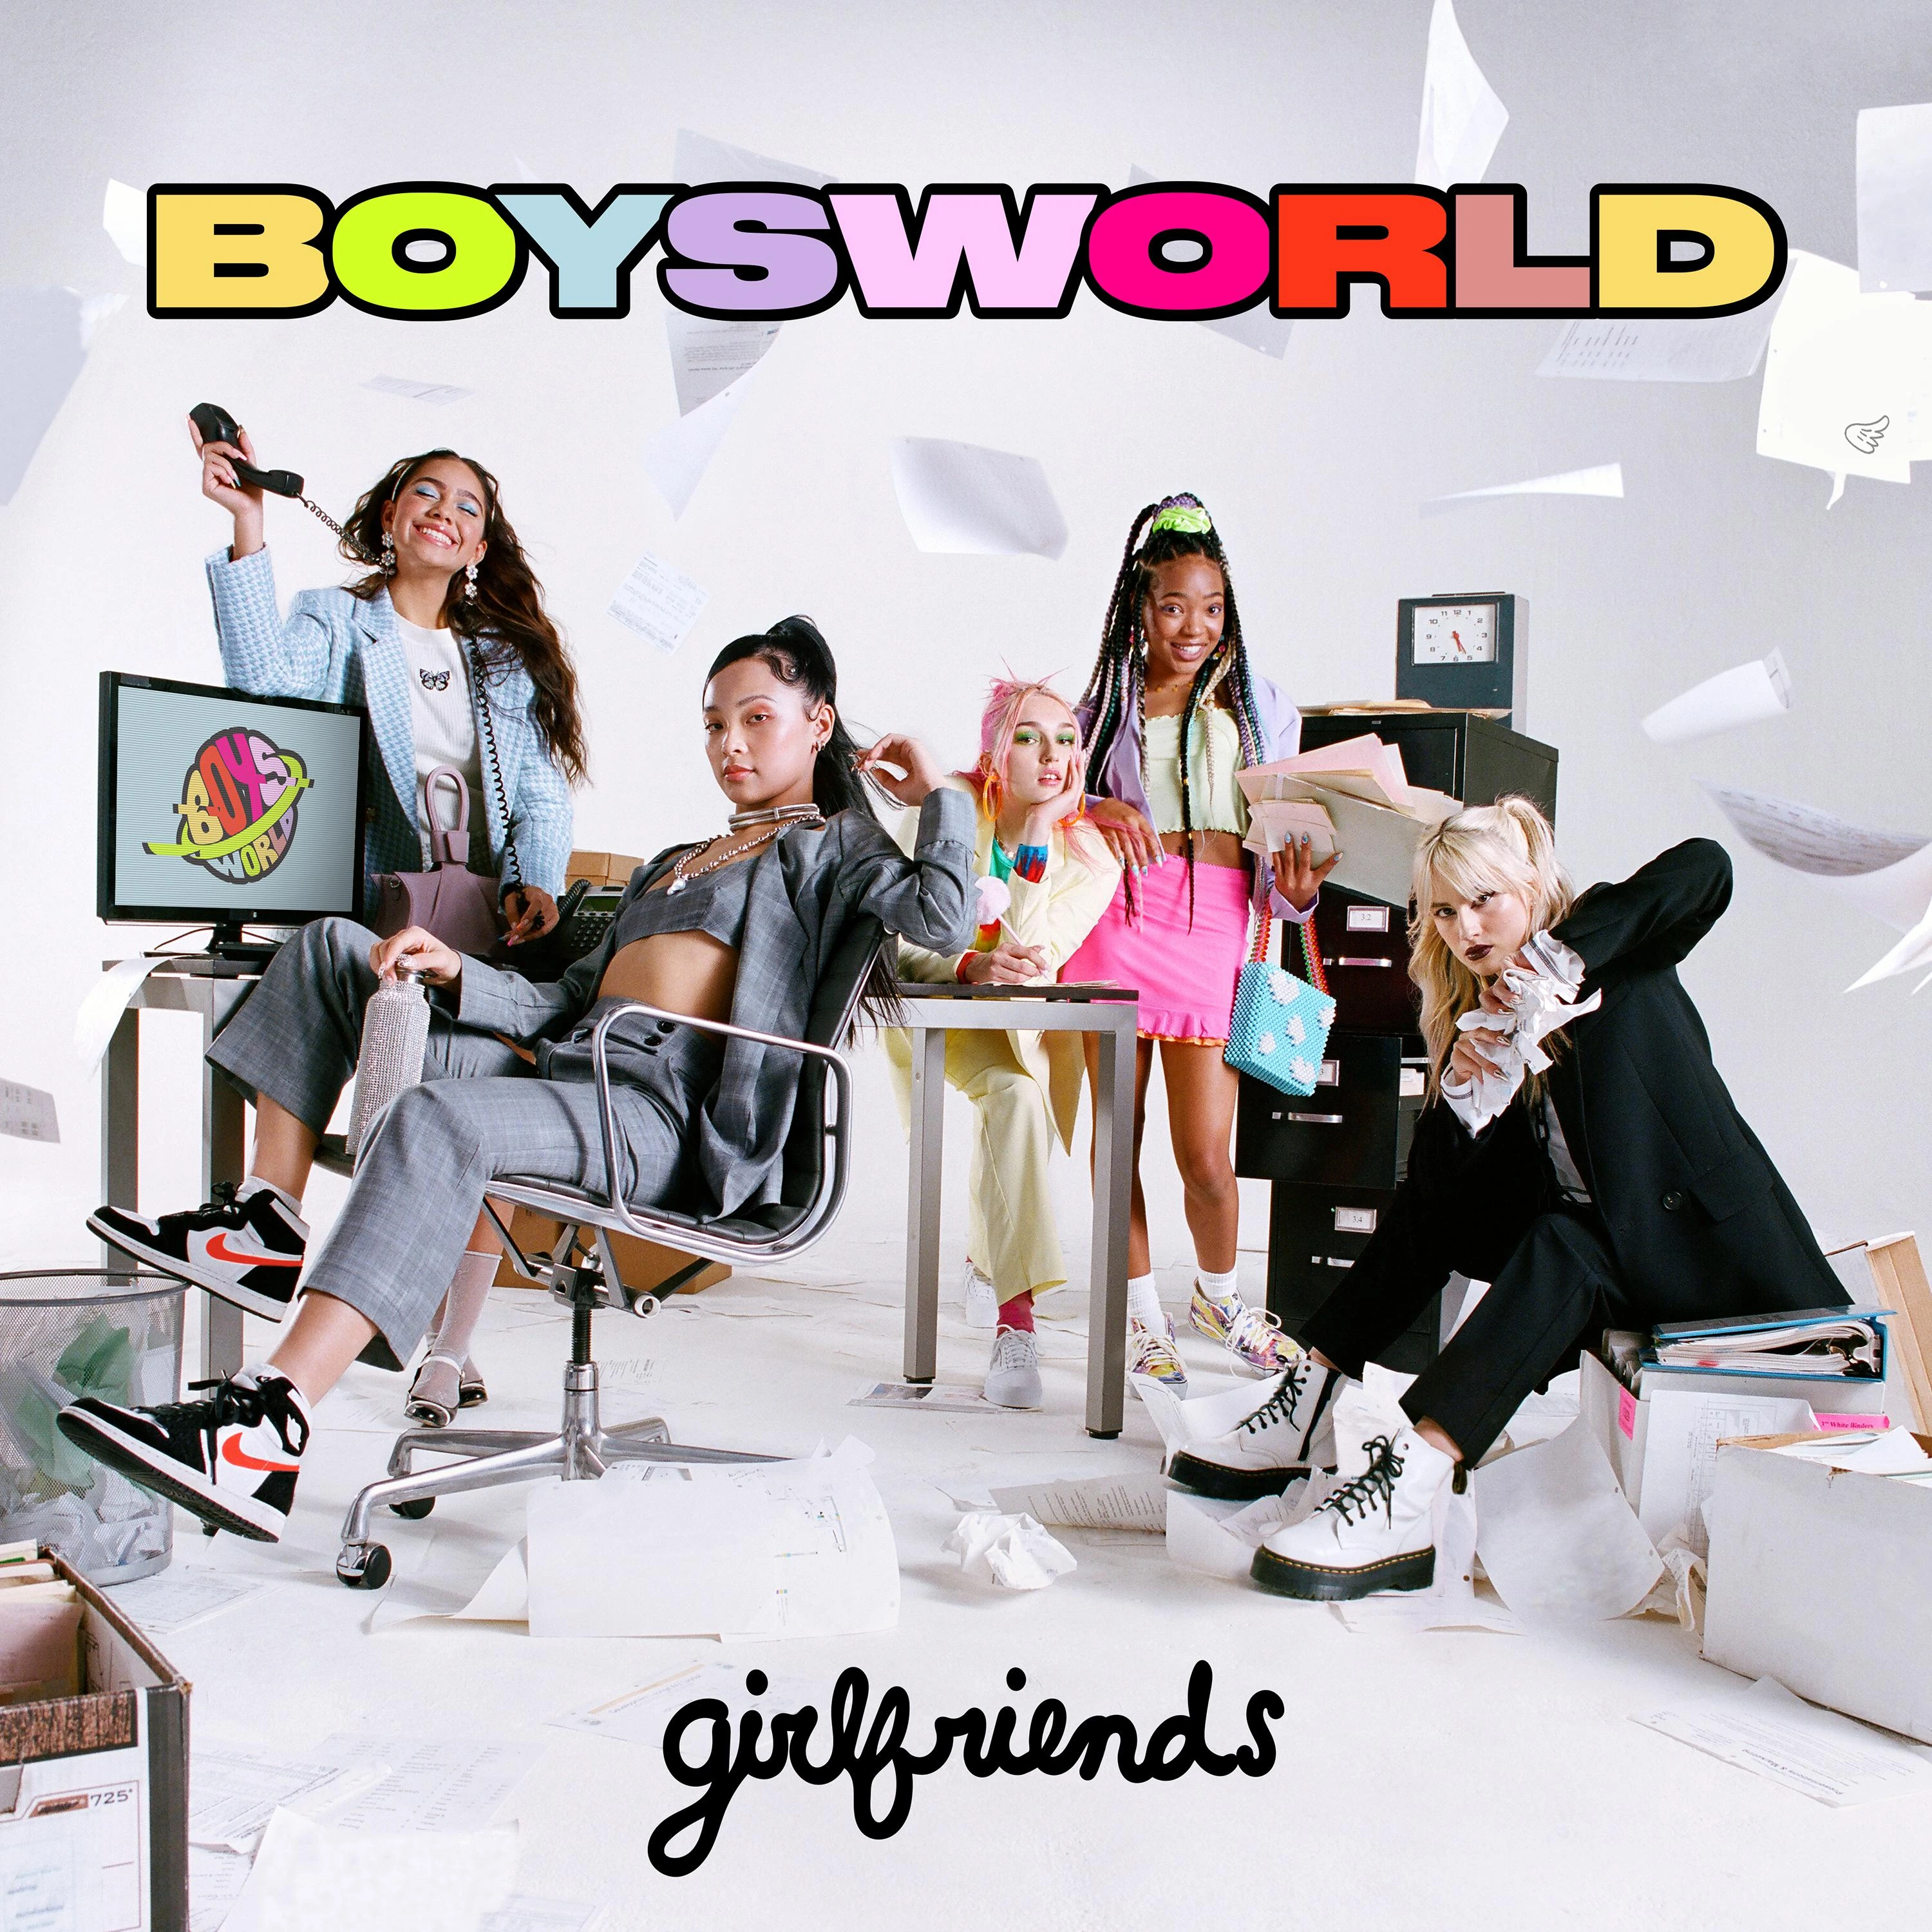 Boys World Girlfriends cover artwork